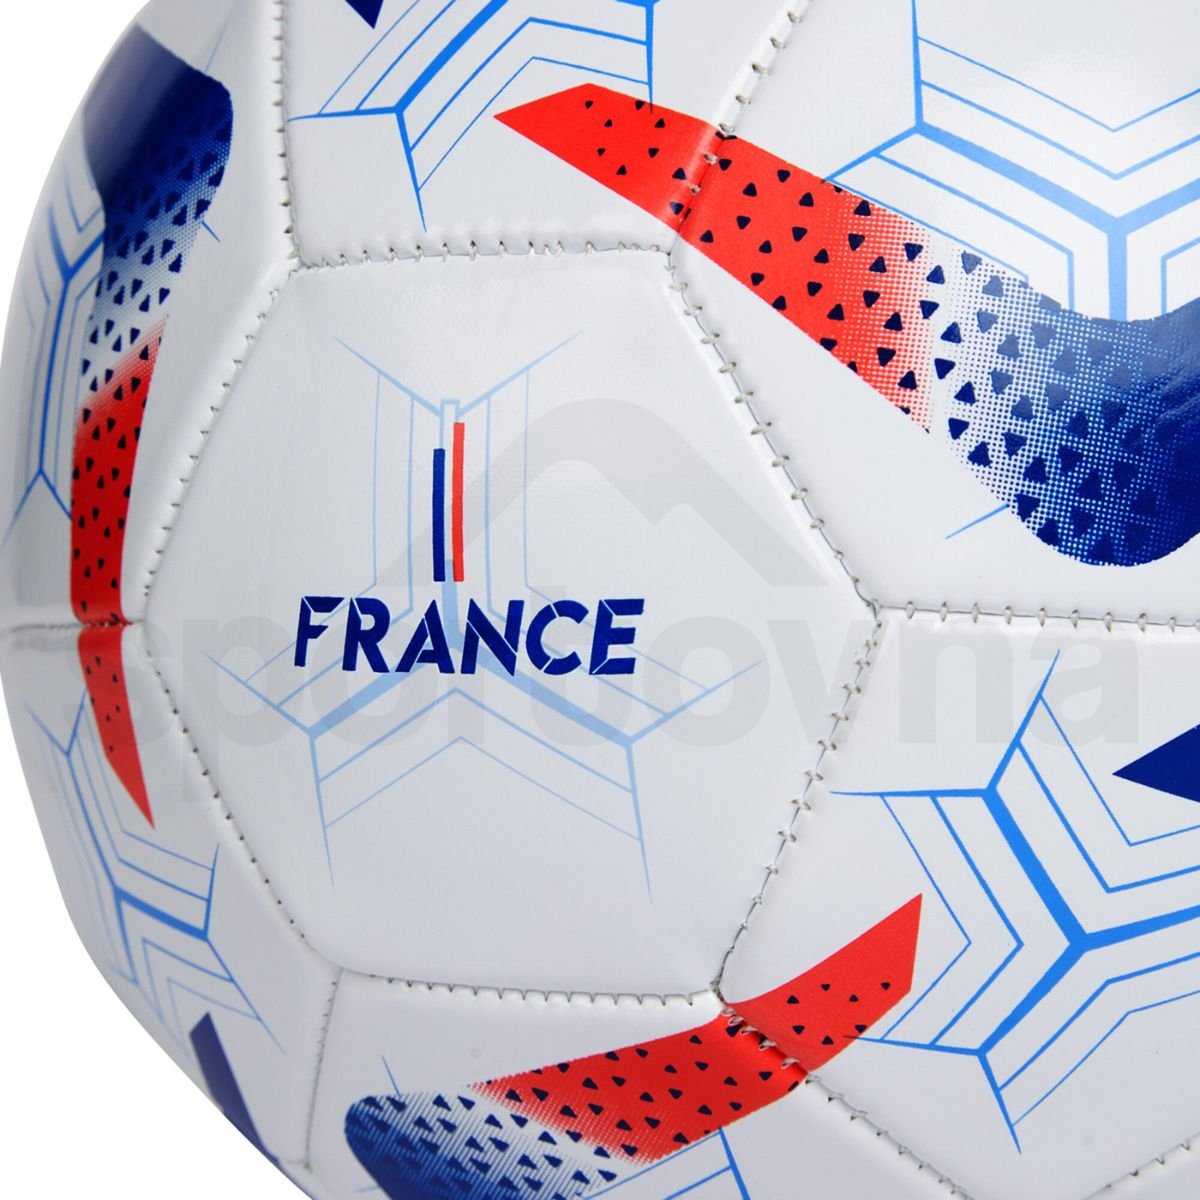 Míč Fotbal Pro Touch Country Ball - Francie